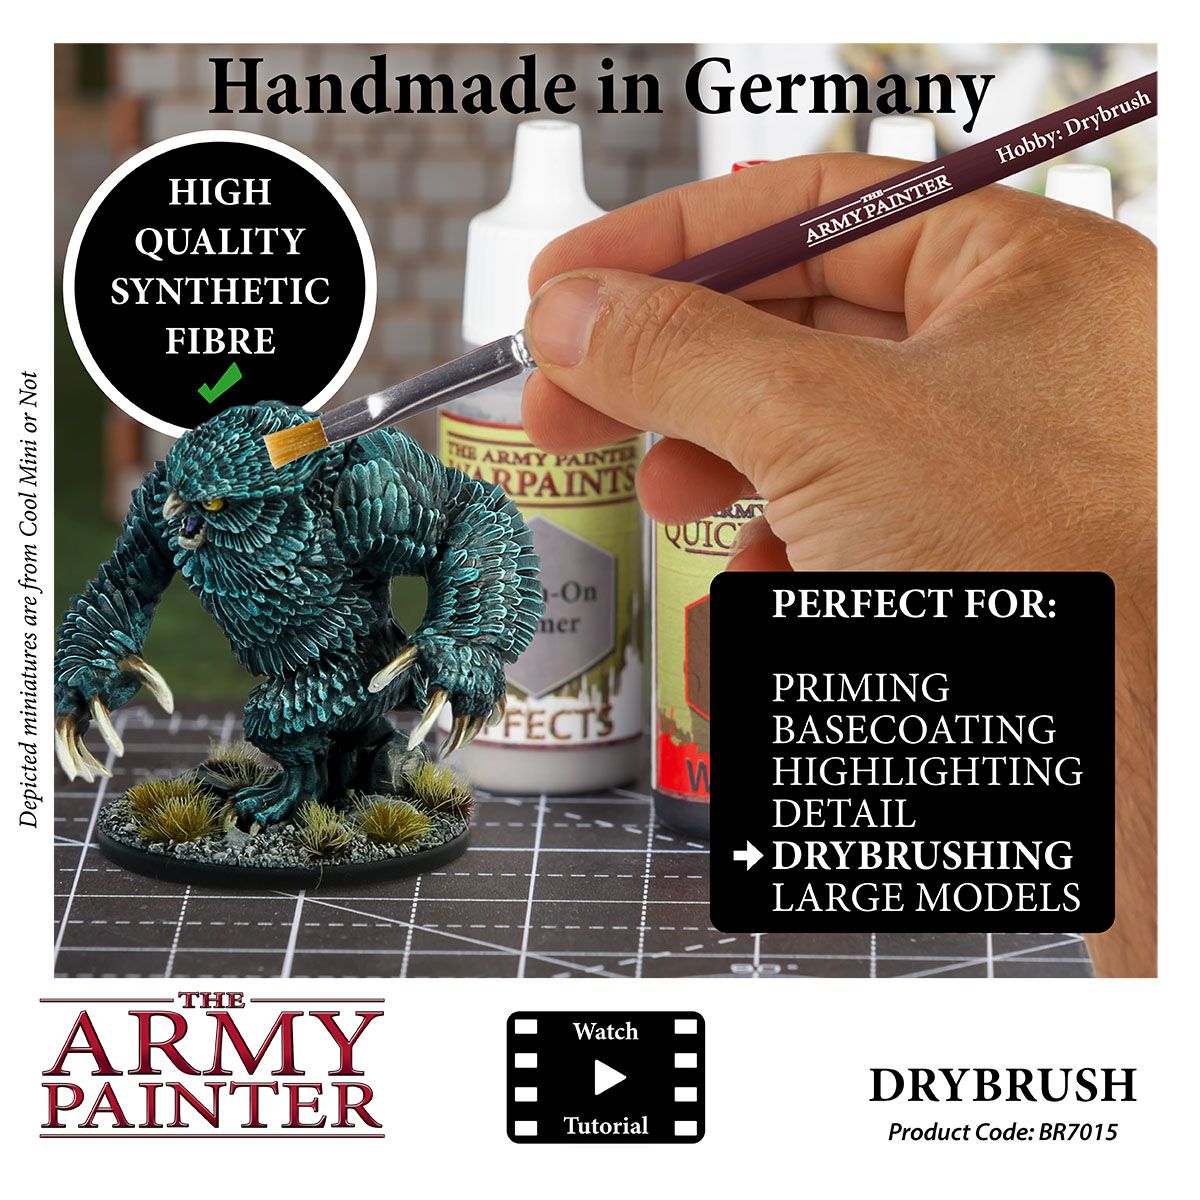 Army Painter Hobby Brush - Drybrush - Loaded Dice